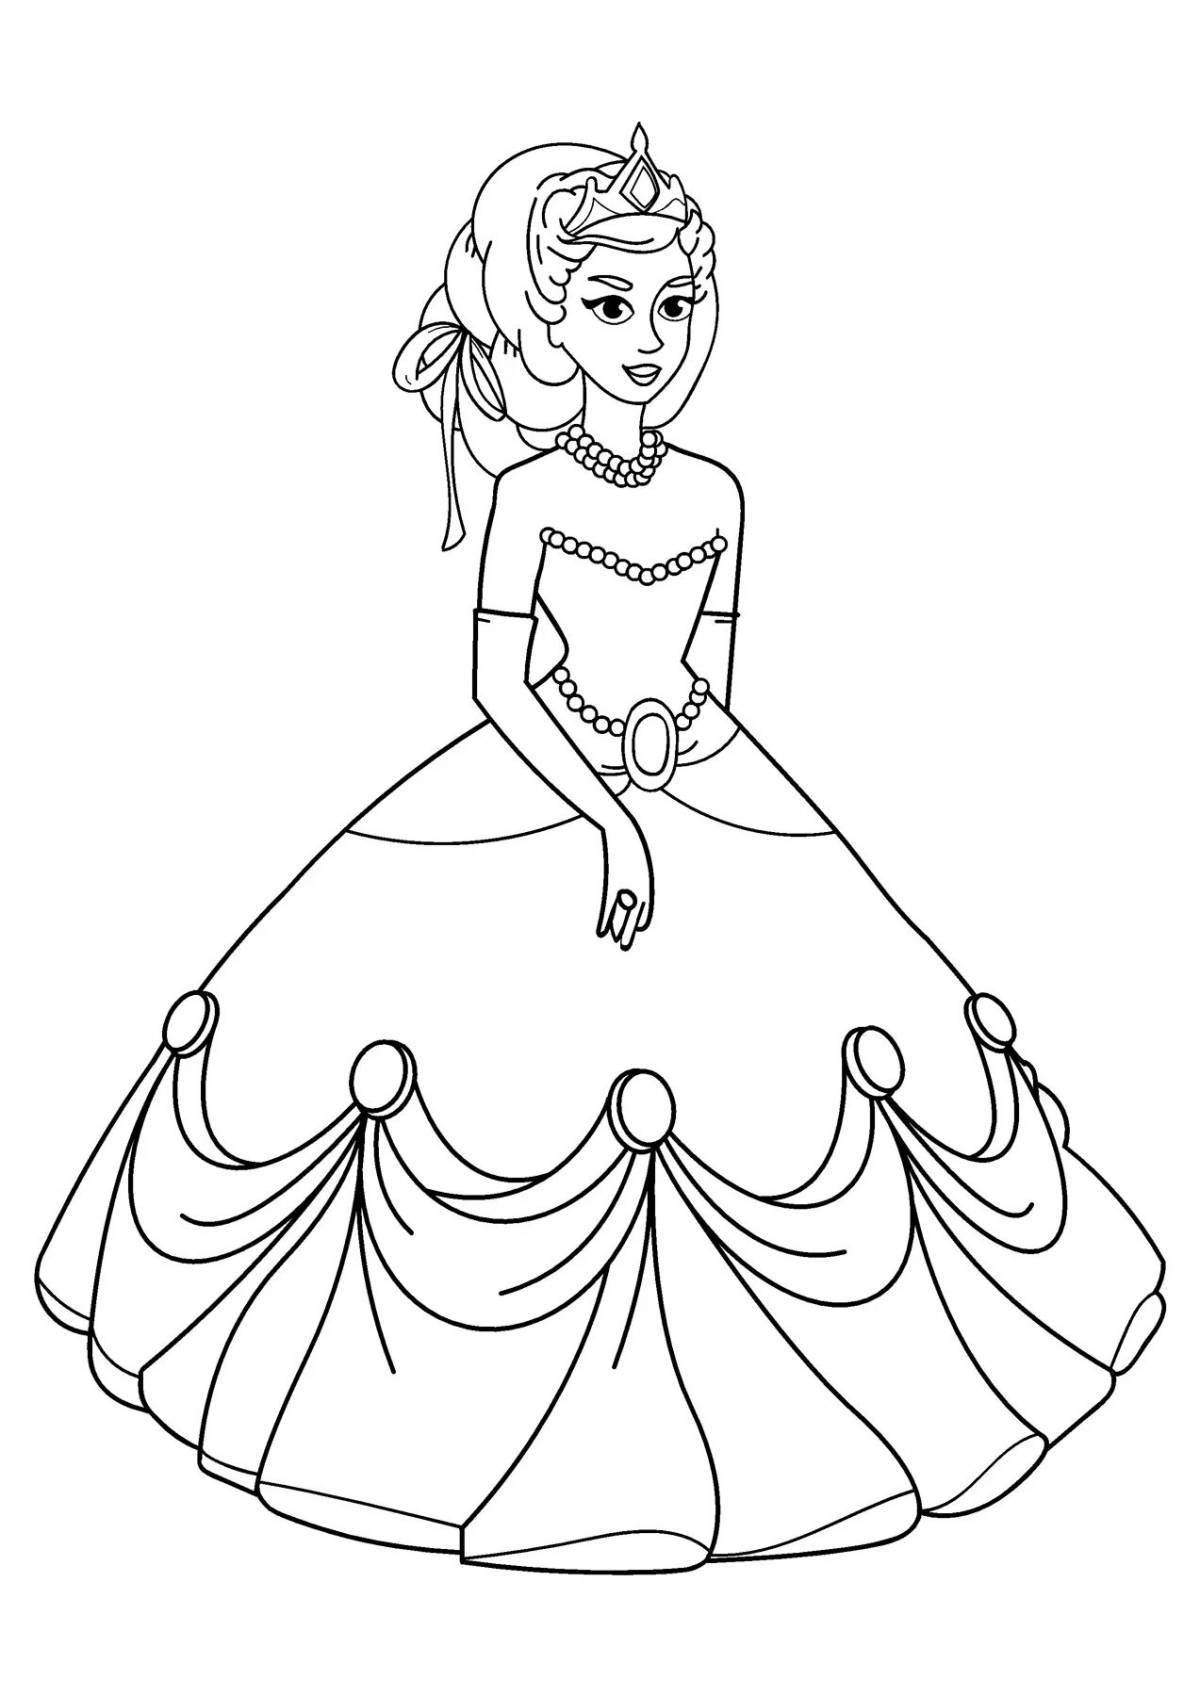 Beautiful coloring drawing of a princess